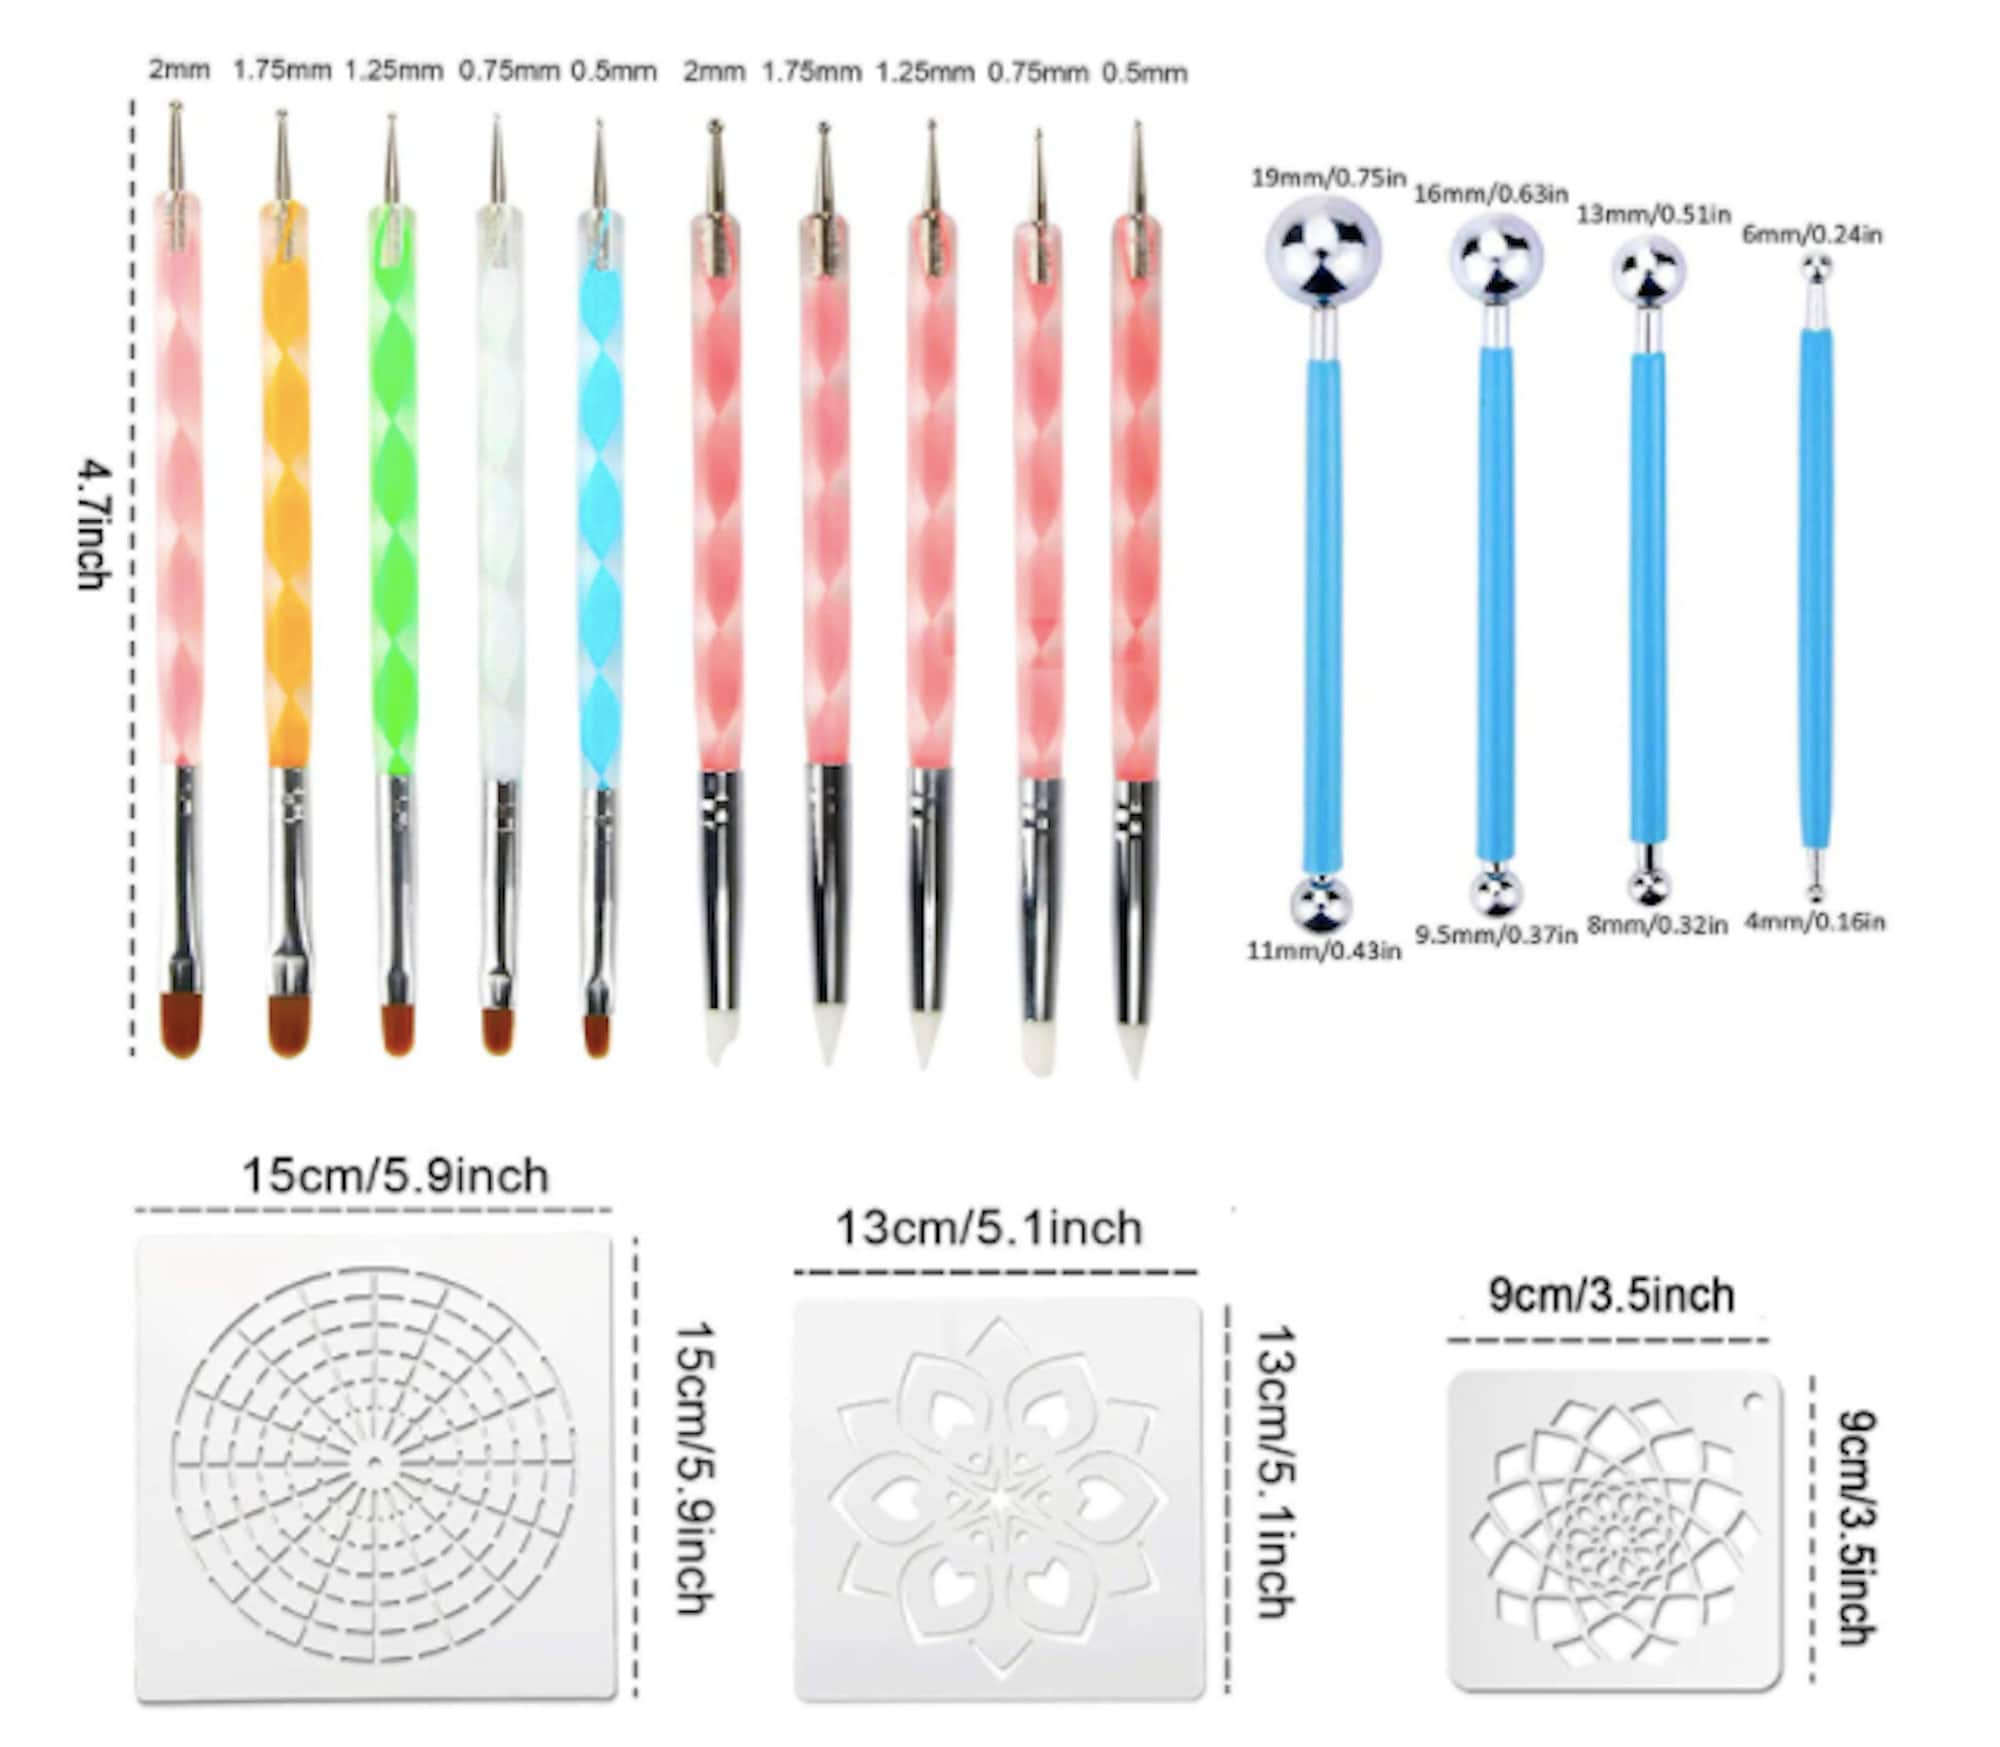 DIY Mandala Dotting Tools Rock Painting Kits Dot Art Pen Paint Stencil From  Chinabrands, $13.71